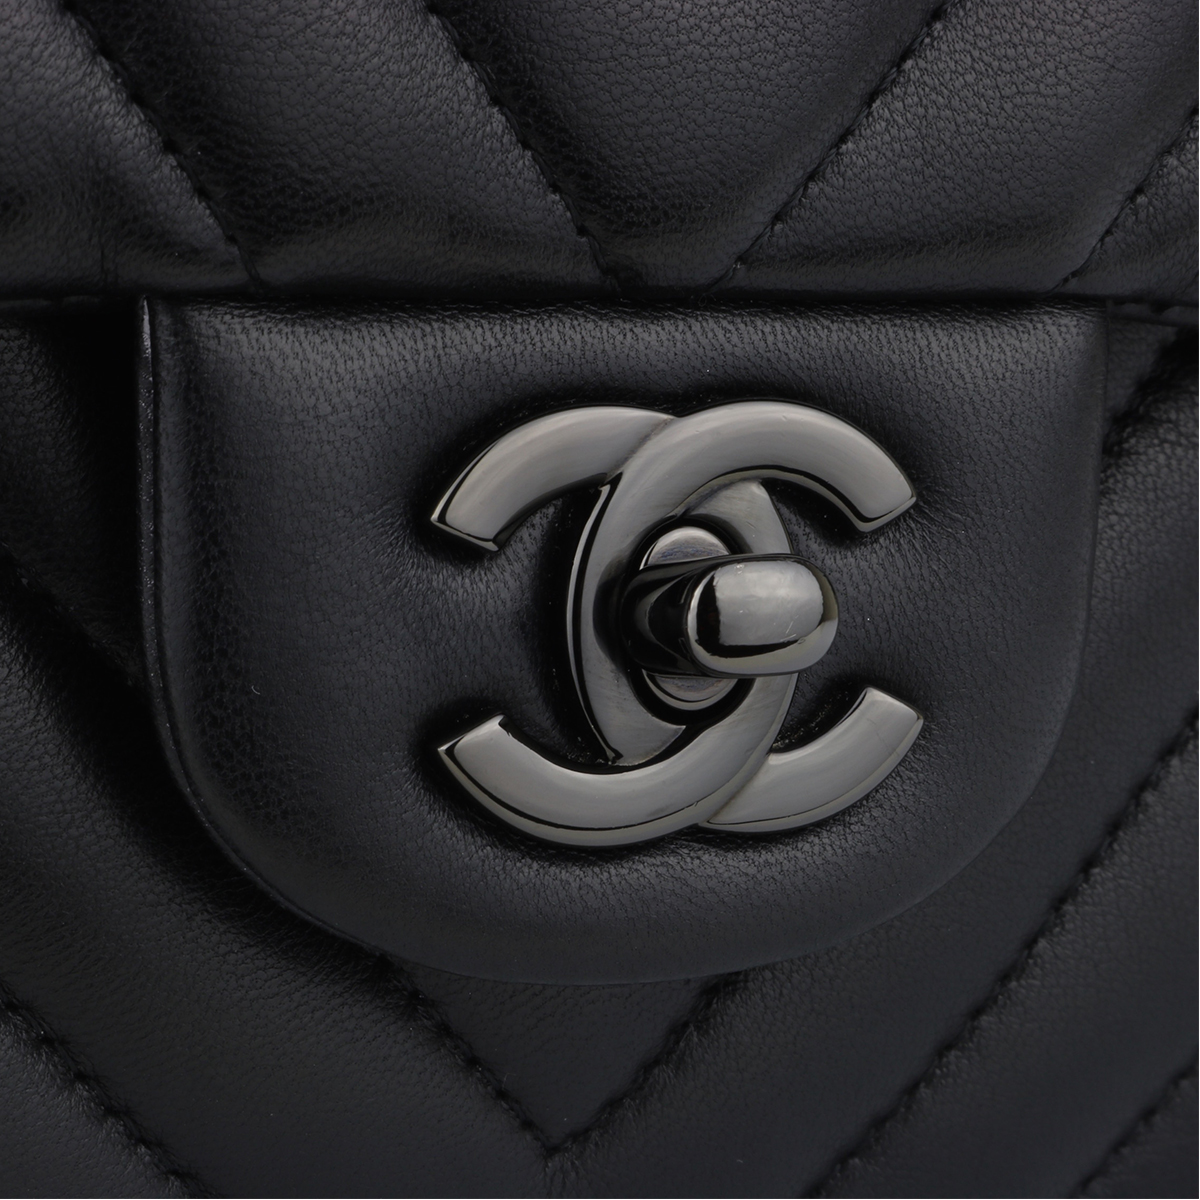 Chanel So Black Chevron Jumbo Double Flap Bag